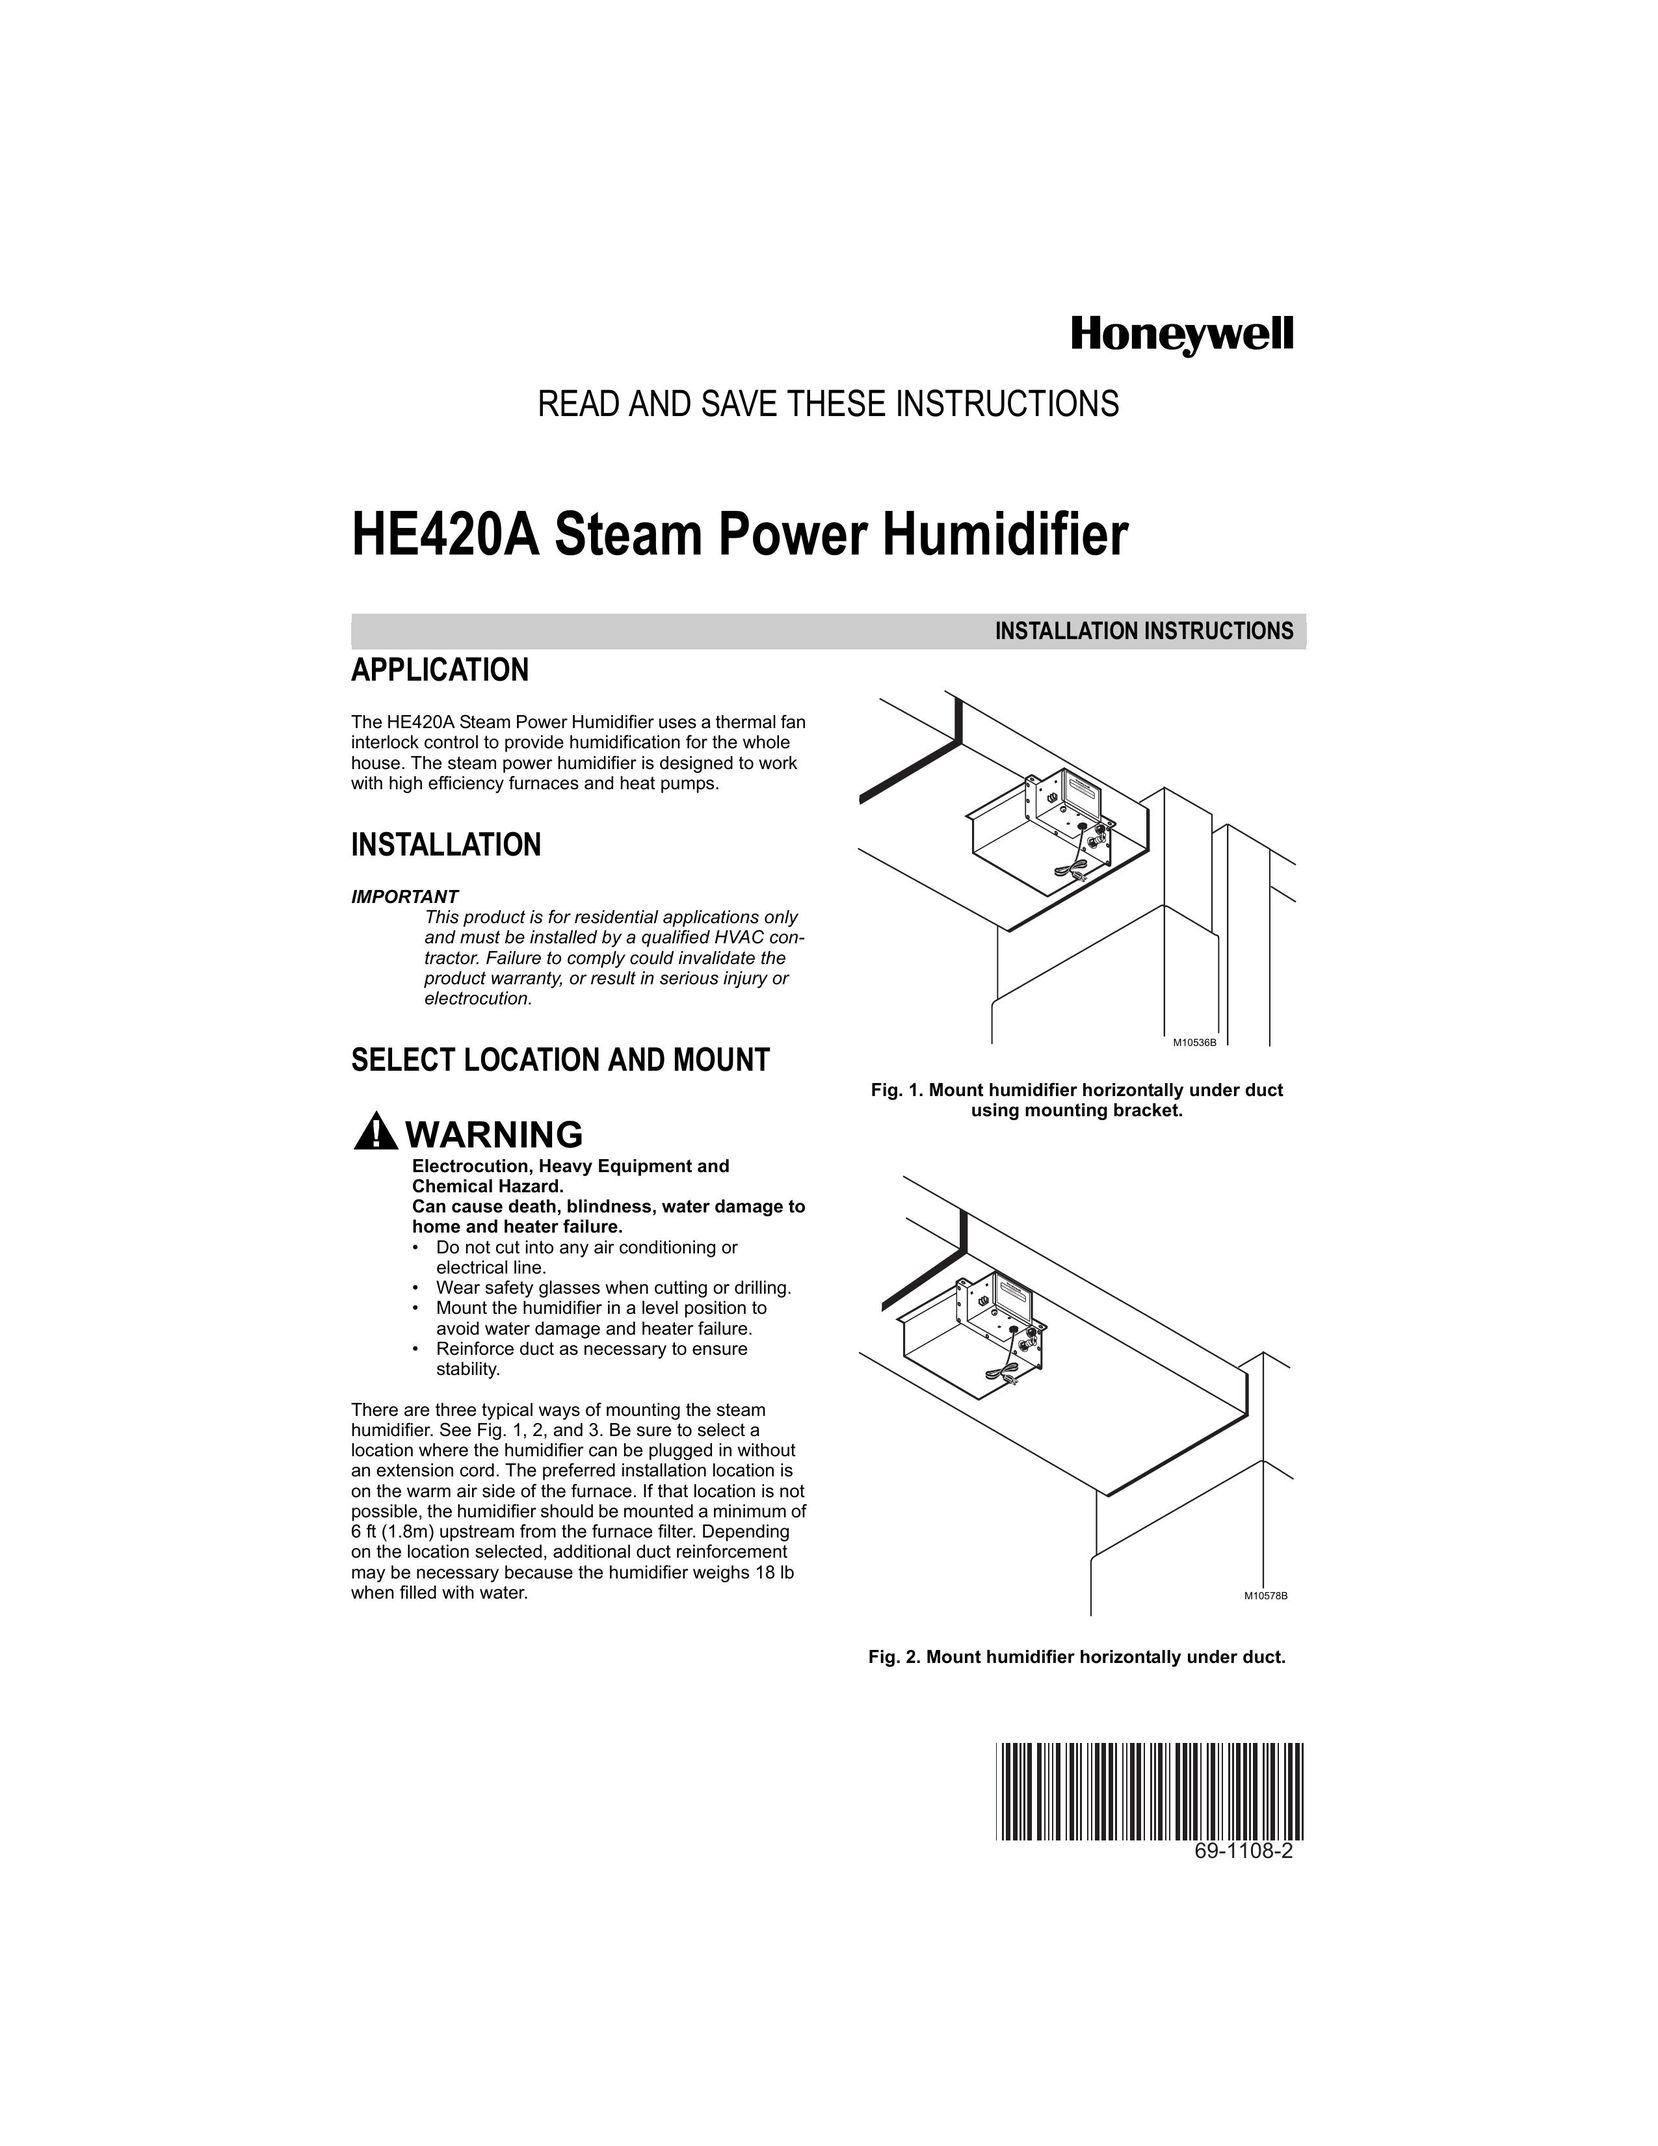 Honeywell HE420A Humidifier User Manual